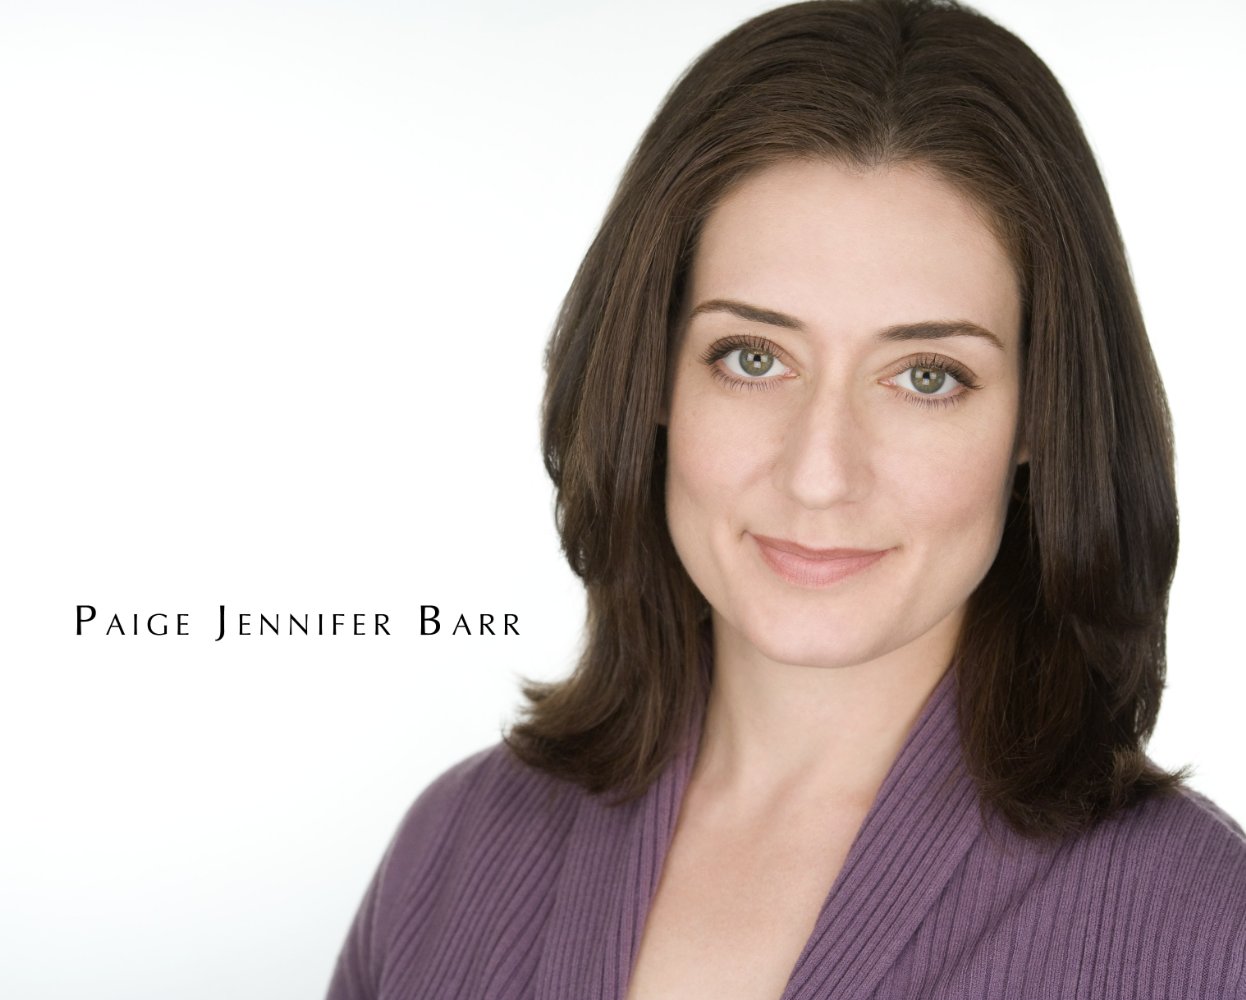 Paige Jennifer Barr